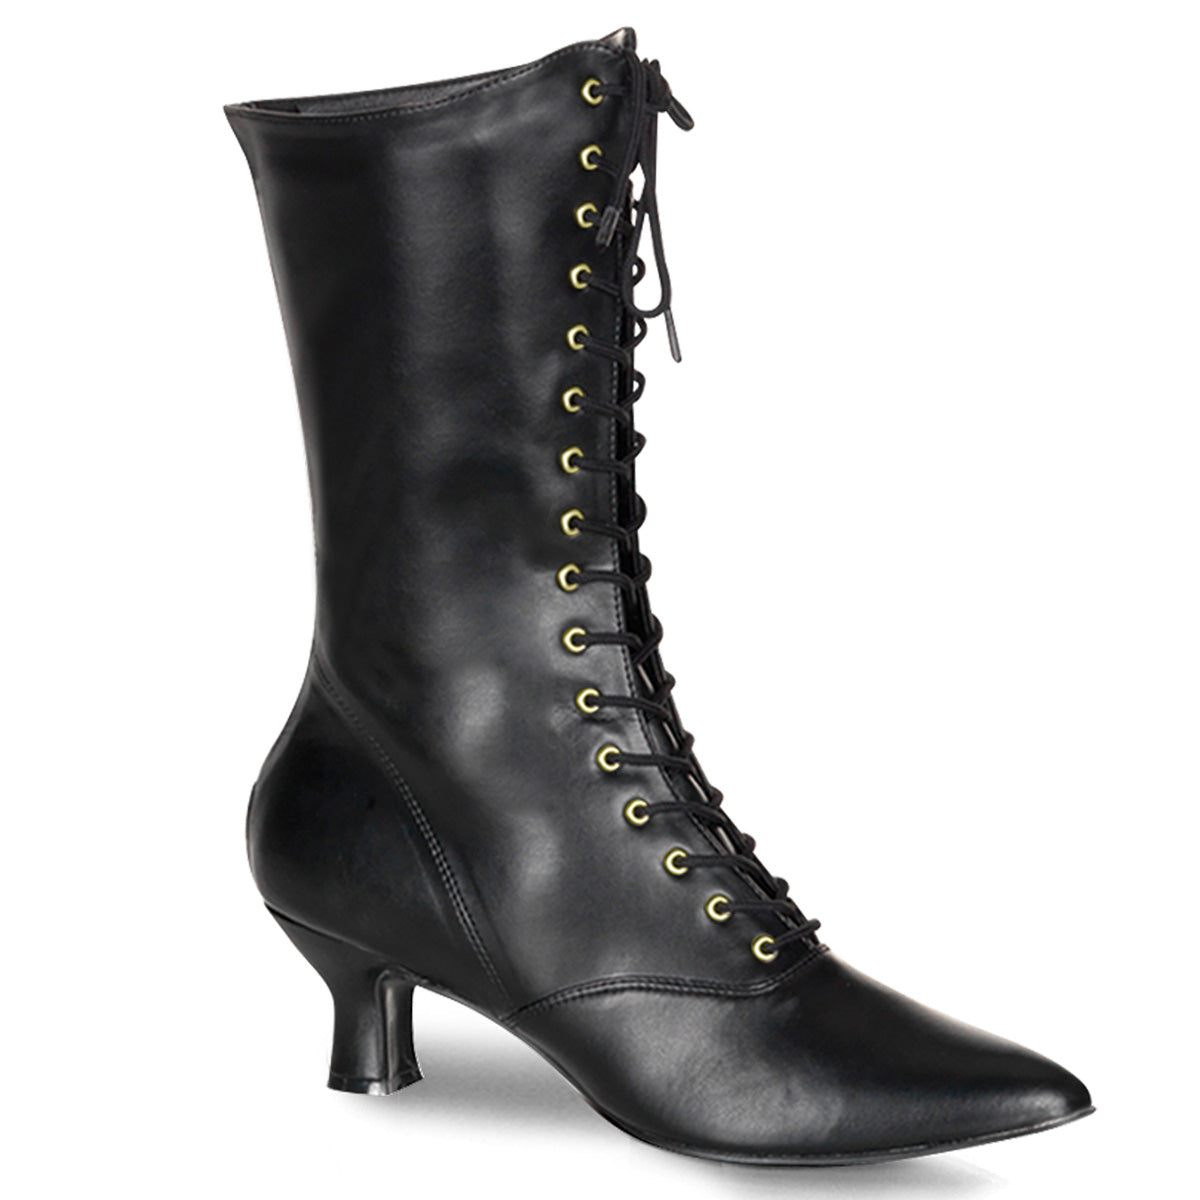 VICTORIAN-120 3 Inch Heel Black Women's Boots Funtasma Costume Shoes